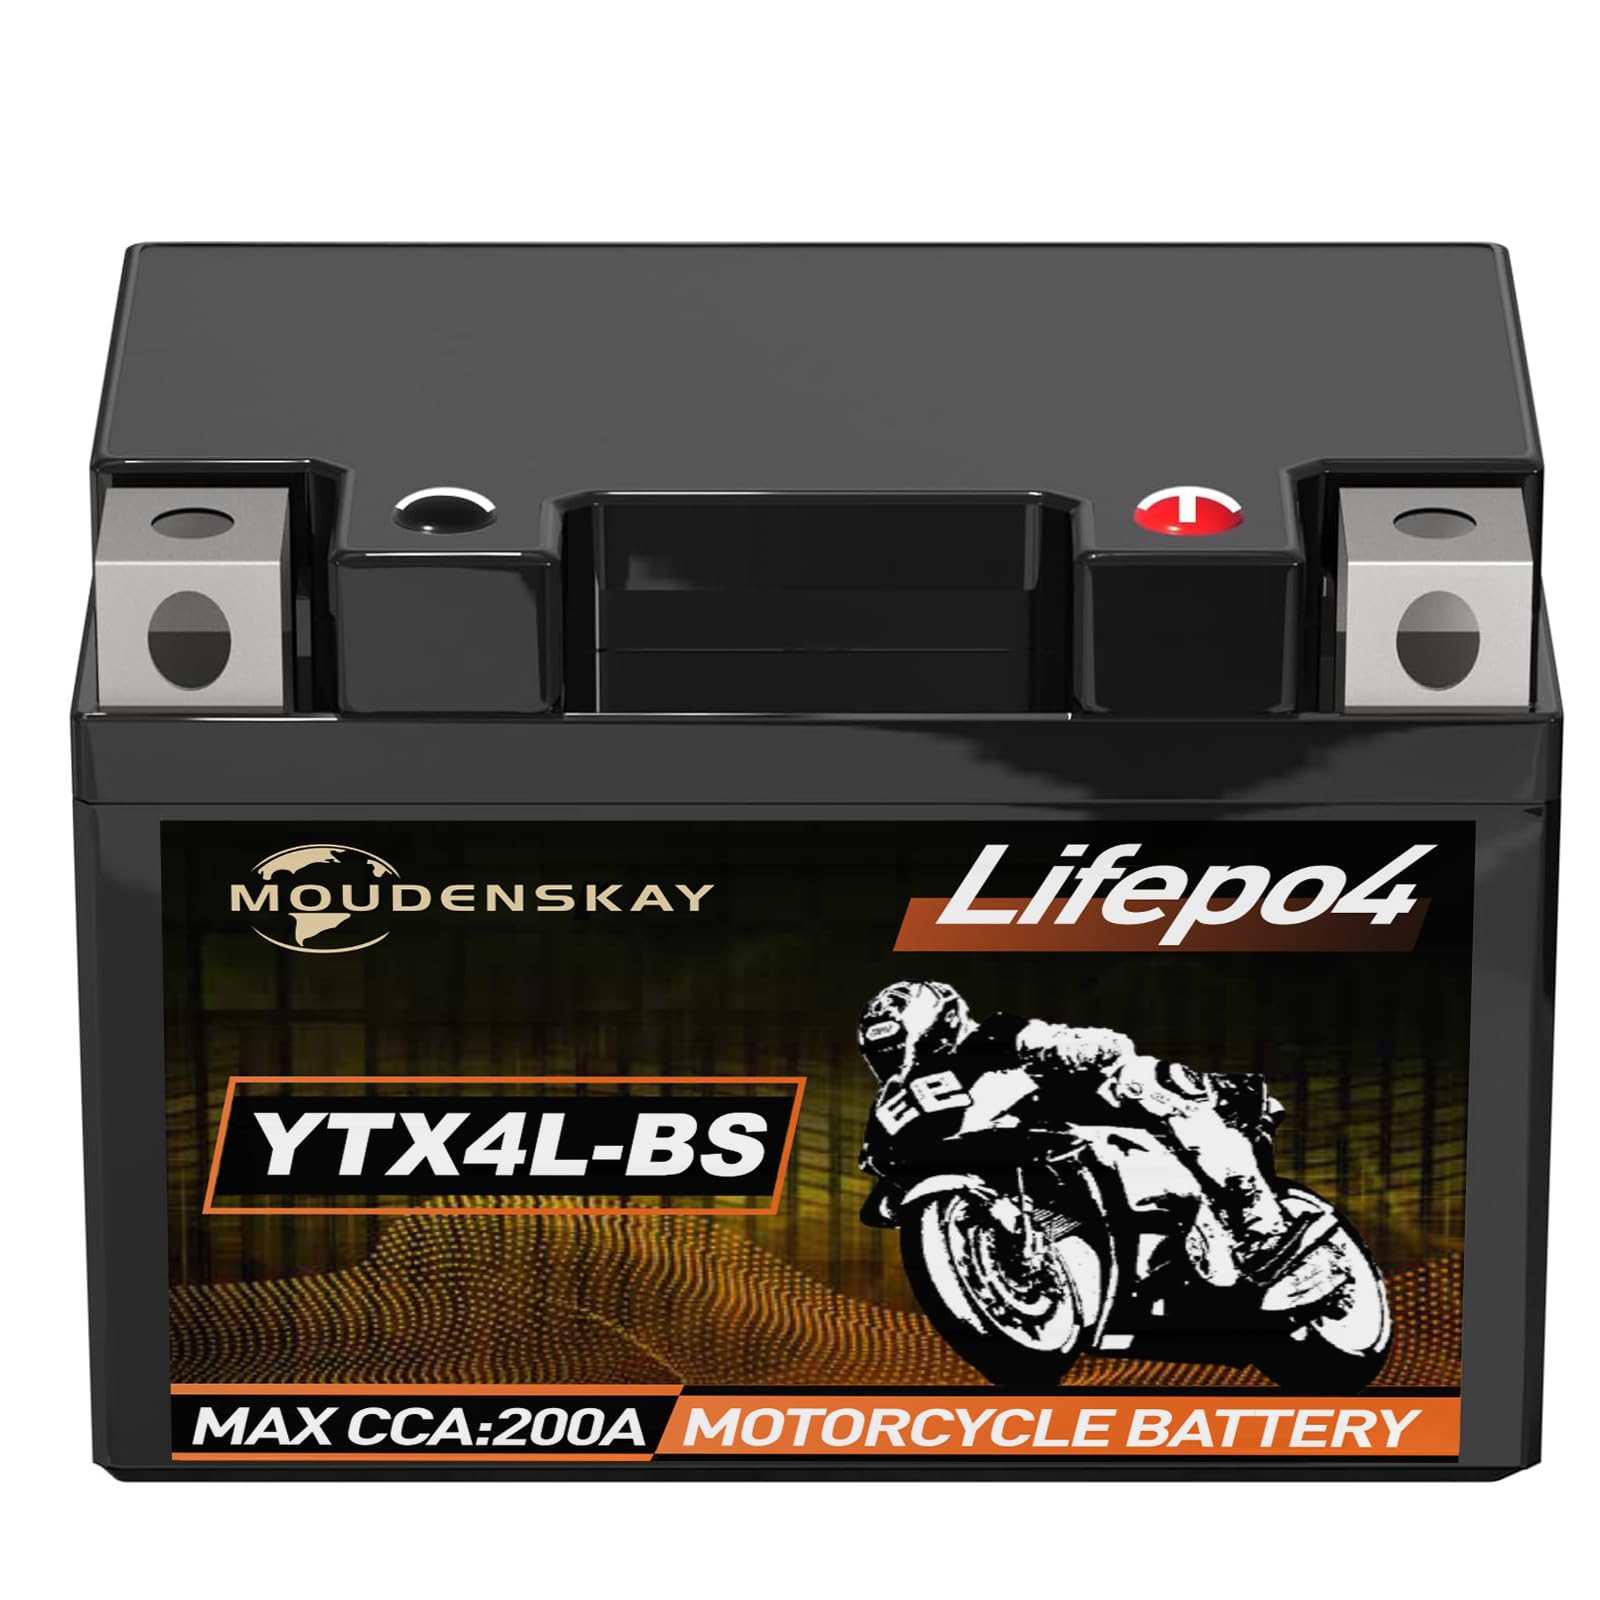 MOUDENSKAY Lithium Motorrad Batterie 12V Lithium Powersports Batterie mit BMS (YTX4L-BS 12.8V 2Ah 200A) LiFePO4 Motorrad Batterie Starterbatterien für Motorräder, ATV, UTV, Wasserfahrzeuge, etc von MOUDENSKAY